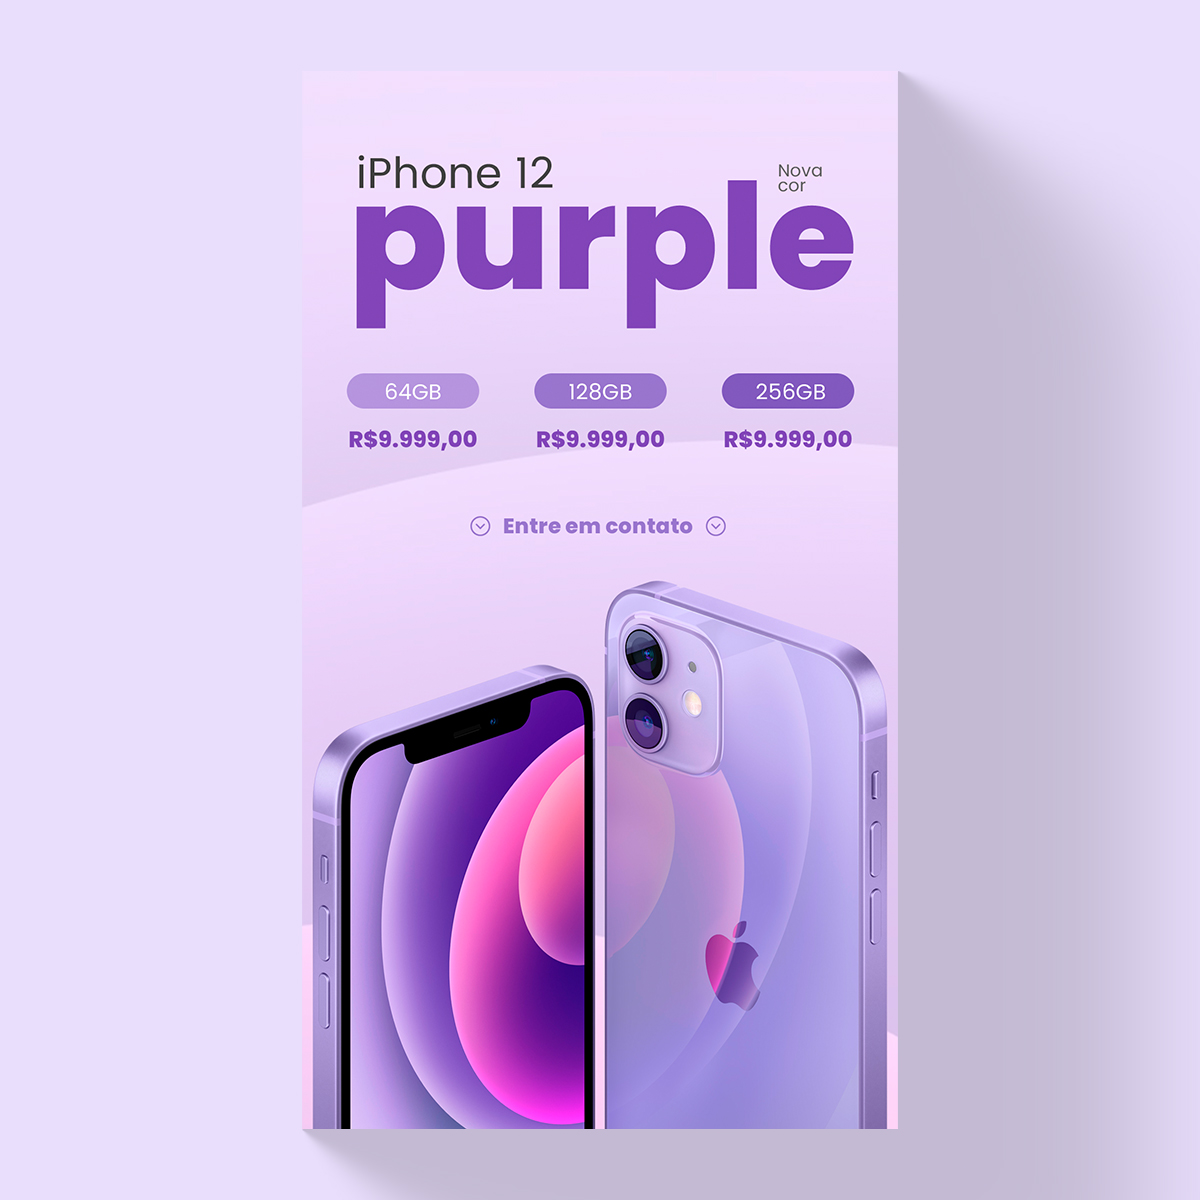 post iphonepurple template promotional 02 45